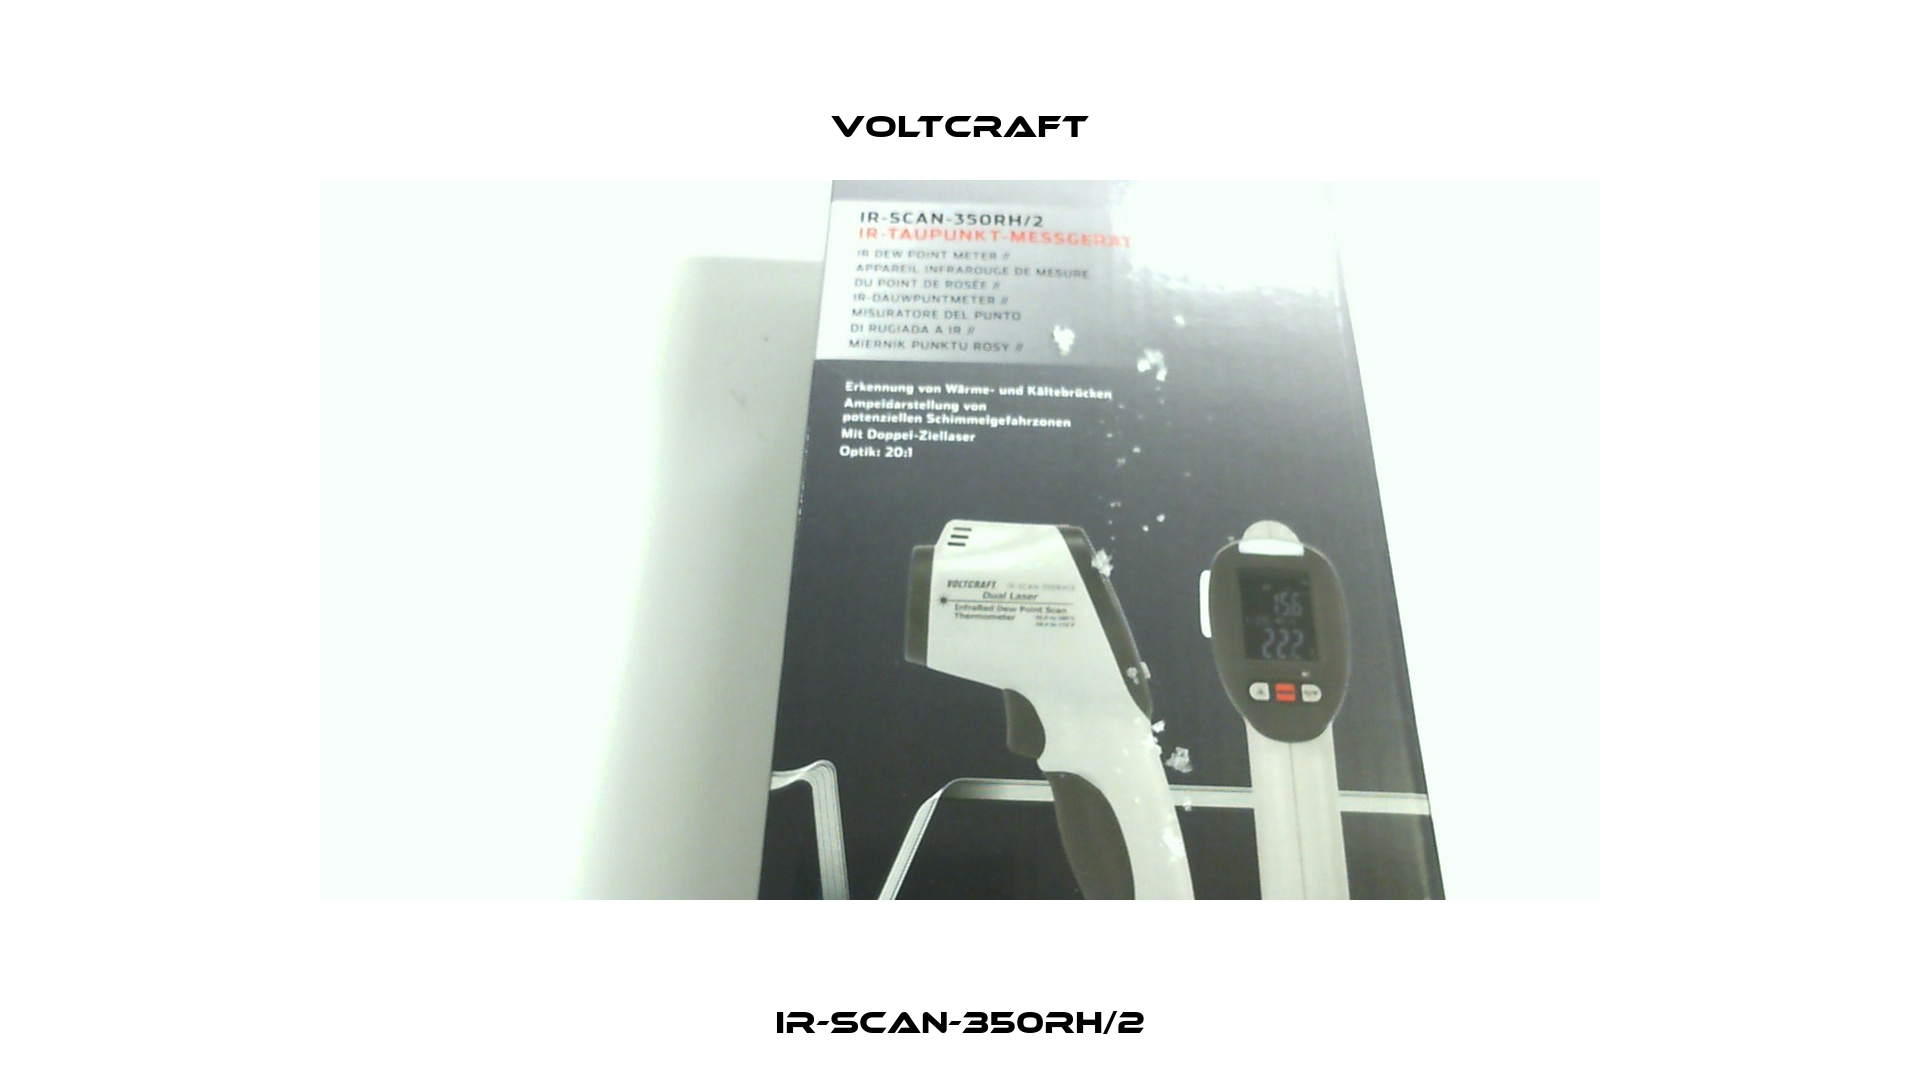 IR-SCAN-350RH/2 Voltcraft